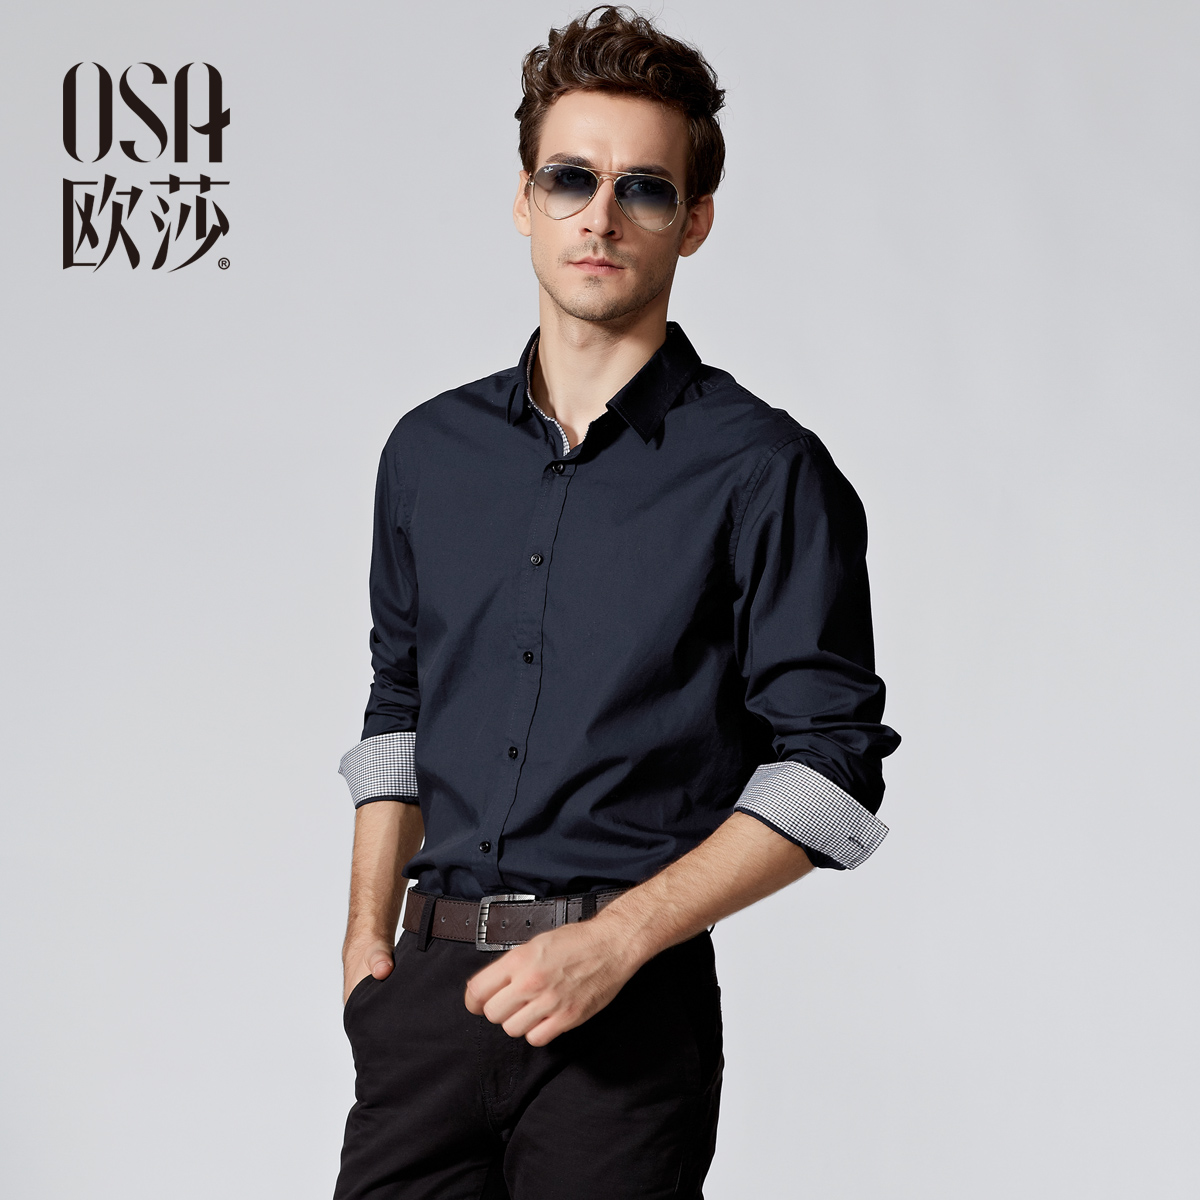 OSA欧莎旗舰店2014夏装新款男装衬衣打底衫上衣长袖衬衫MC420008